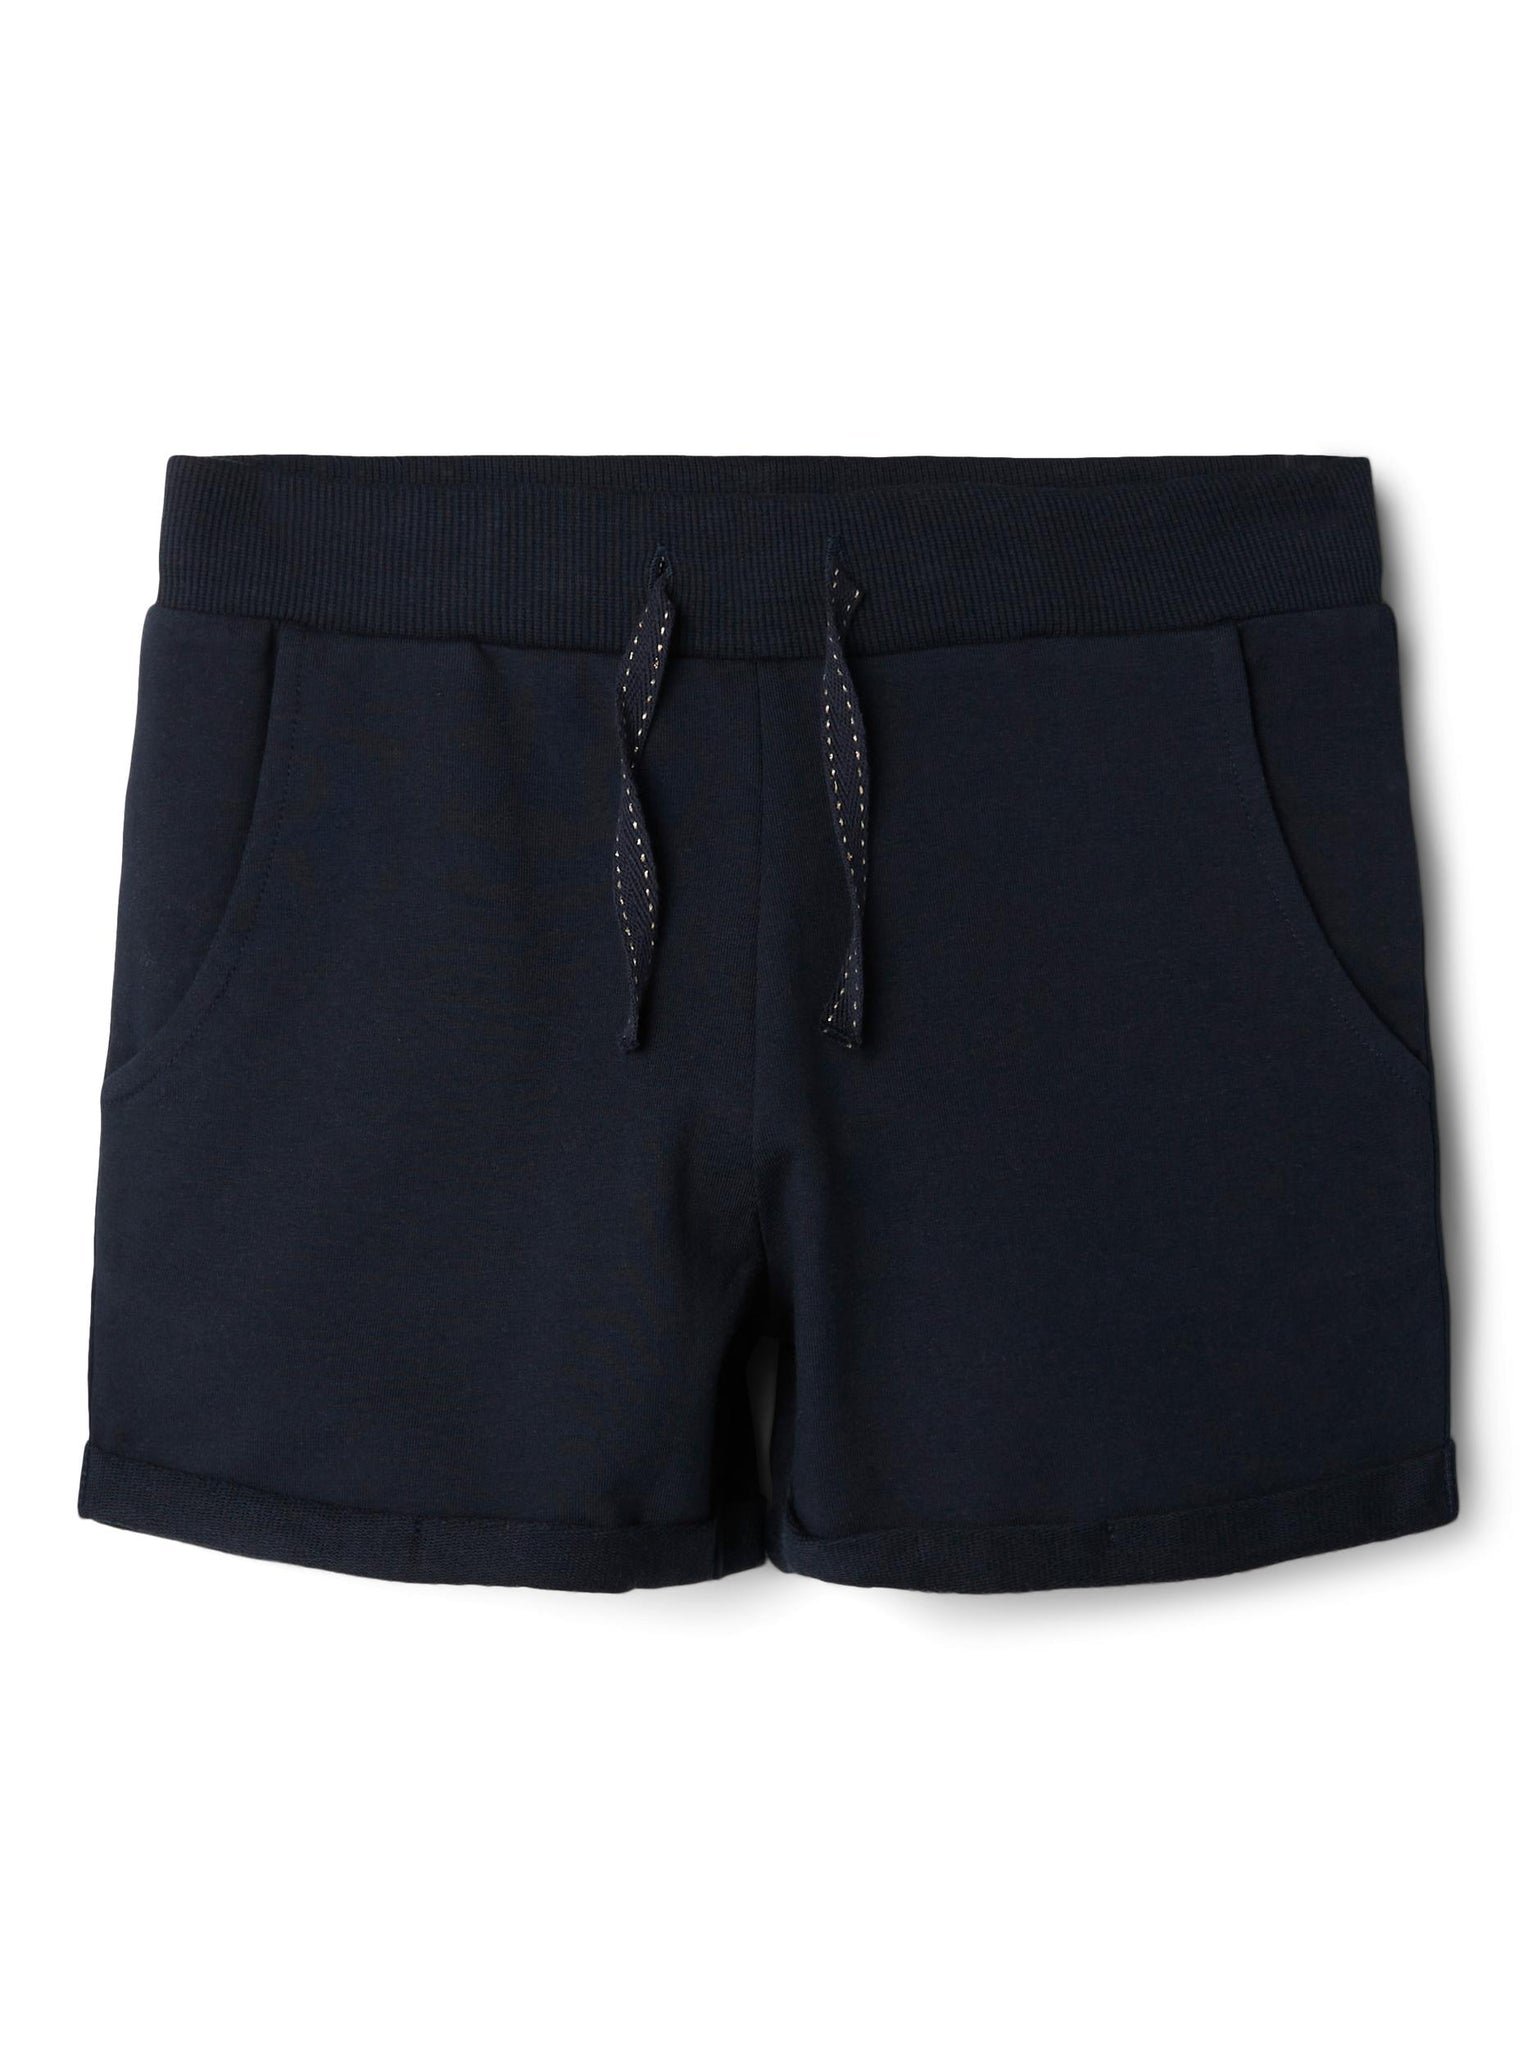 Girls Navy Sweat Shorts